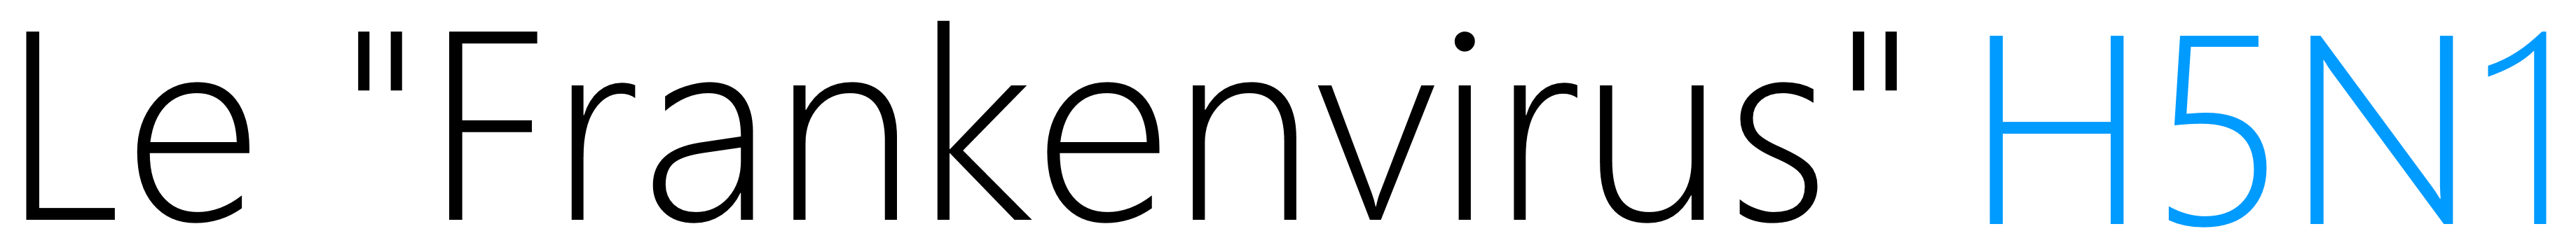 Le "Frankenvirus" H5N1 logo